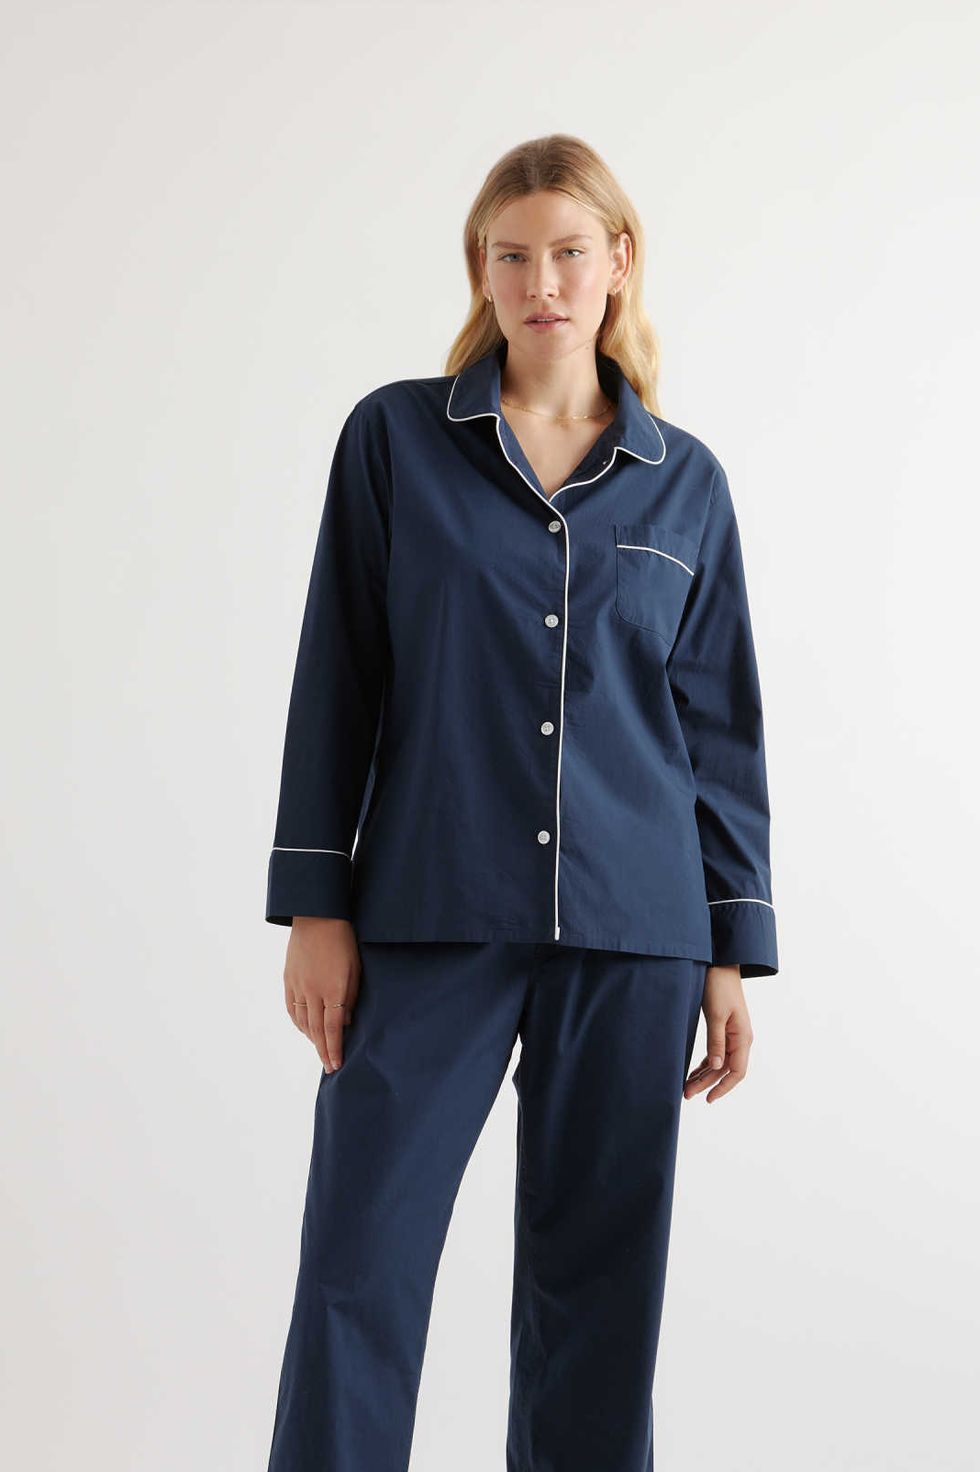 amaxer Women's 100% Cotton Pajama Sets